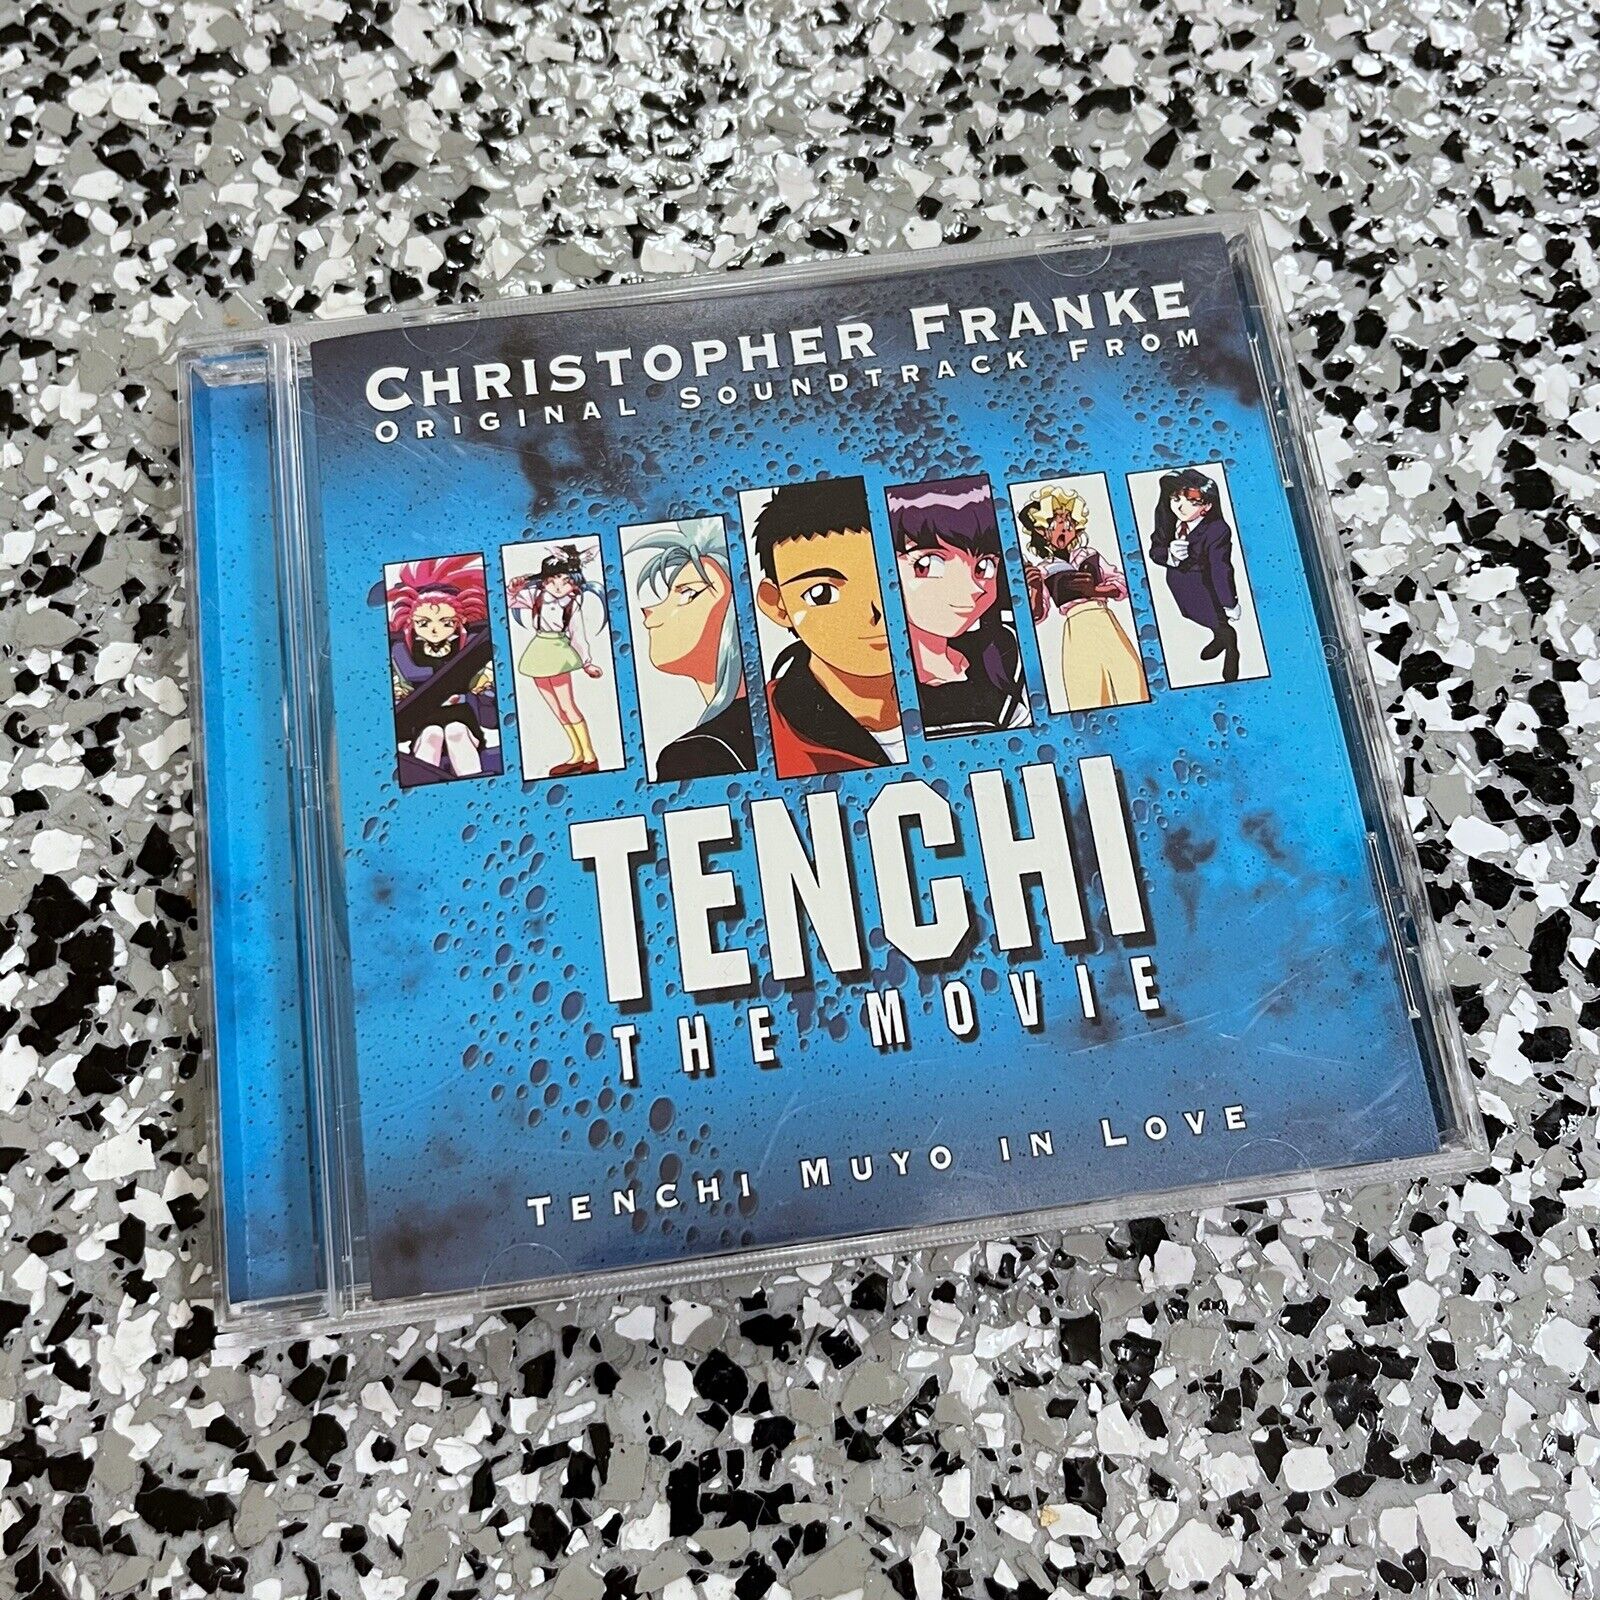 Tenchi The Movie Tenchi Muyo In Love CD Soundtrack Complete 2002 Good